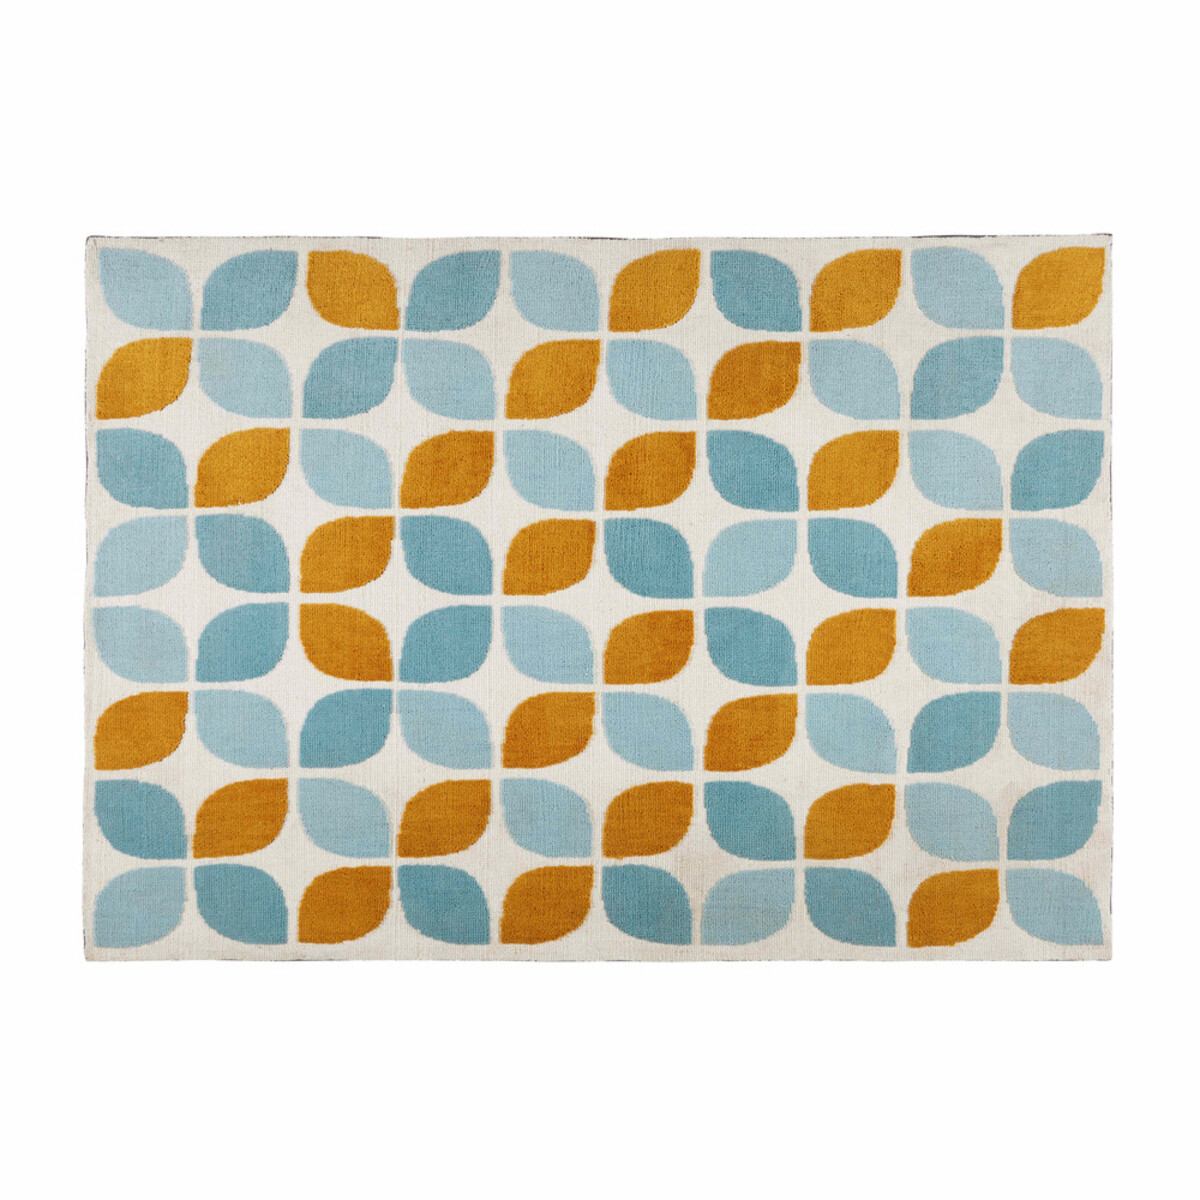 Tapis en tissu motifs orange et bleus 140x200cm SEVEN